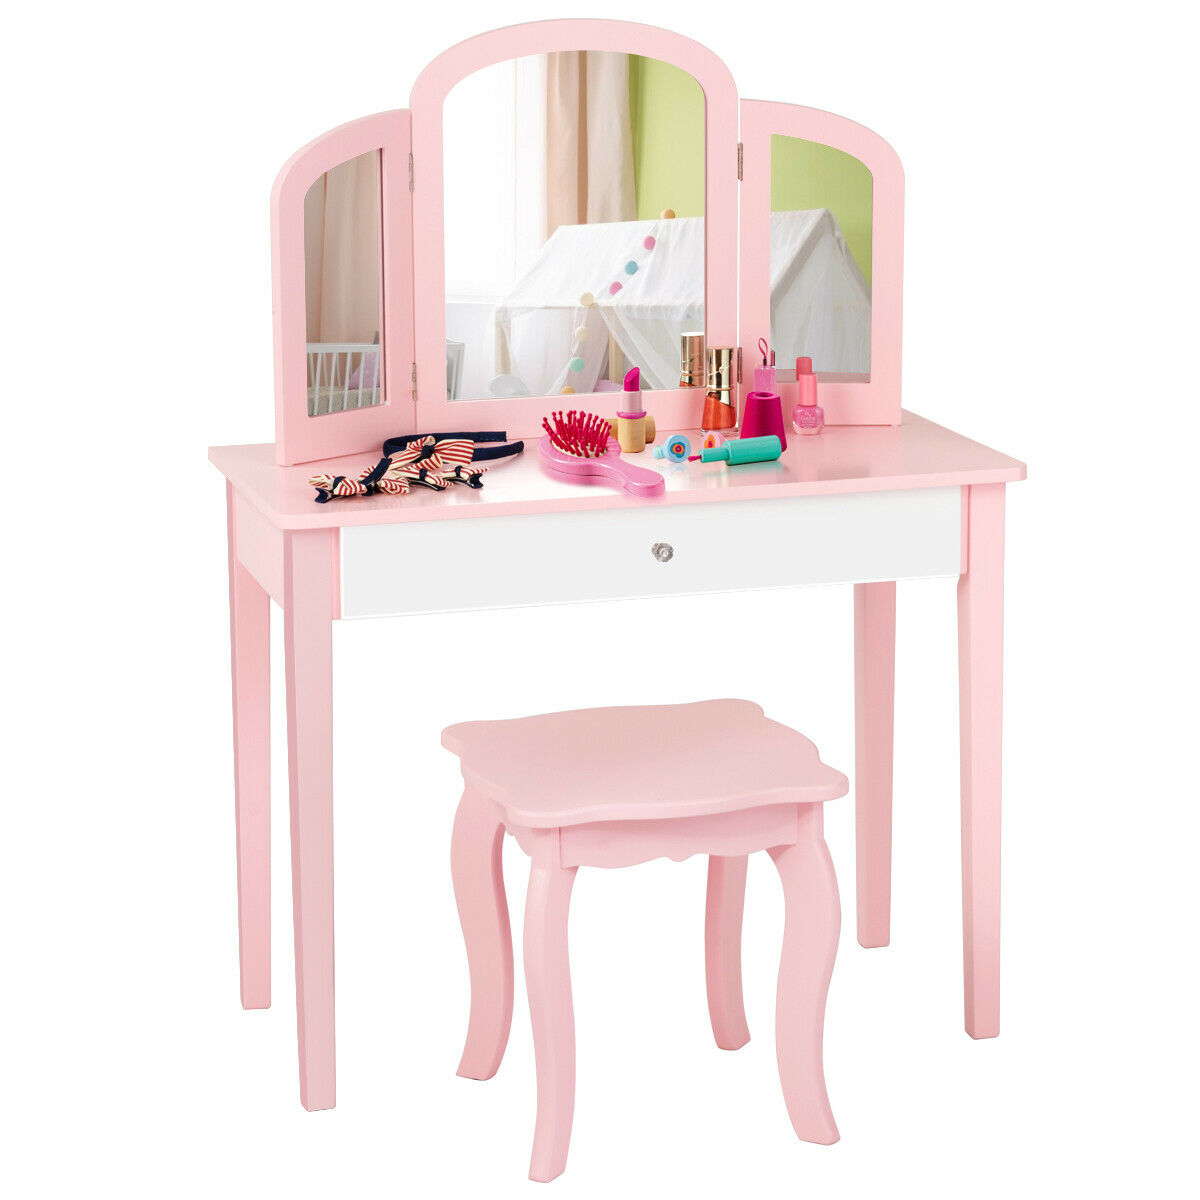 Gymax Kids Vanity Princess Make Up, Vanity Desk With Mirror And Seat